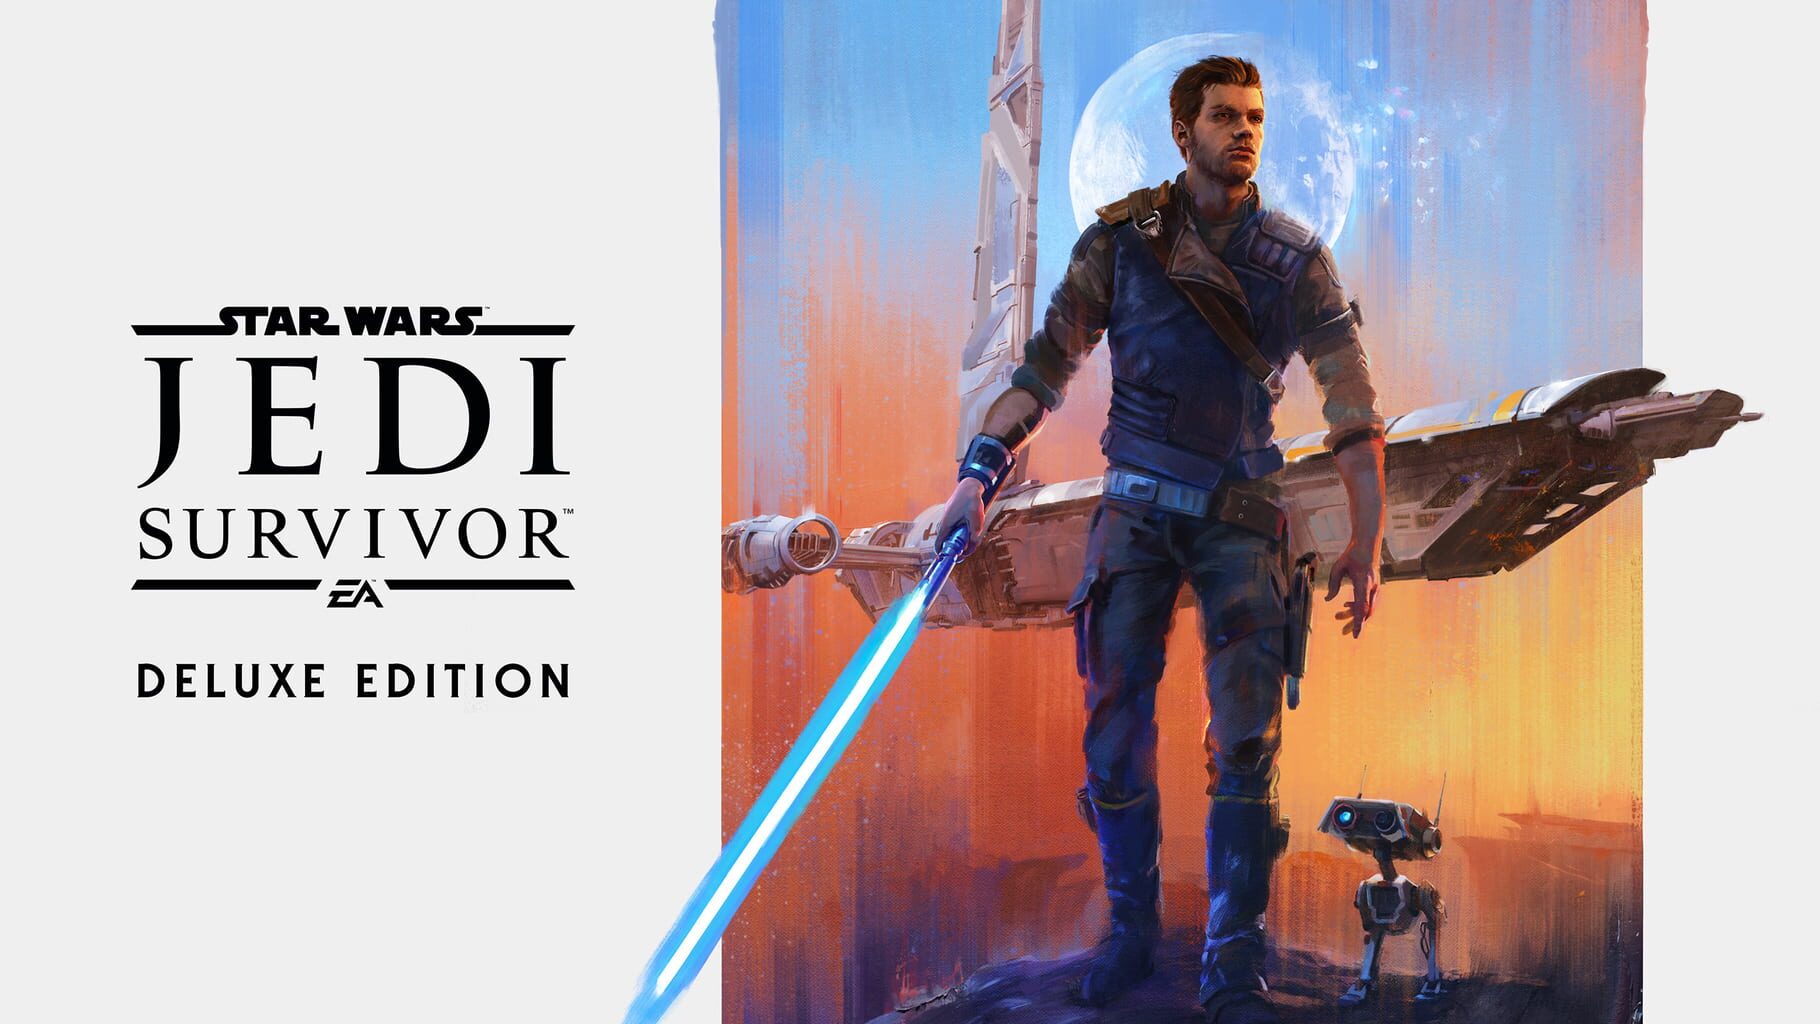 Arte - Star Wars Jedi: Survivor - Deluxe Edition